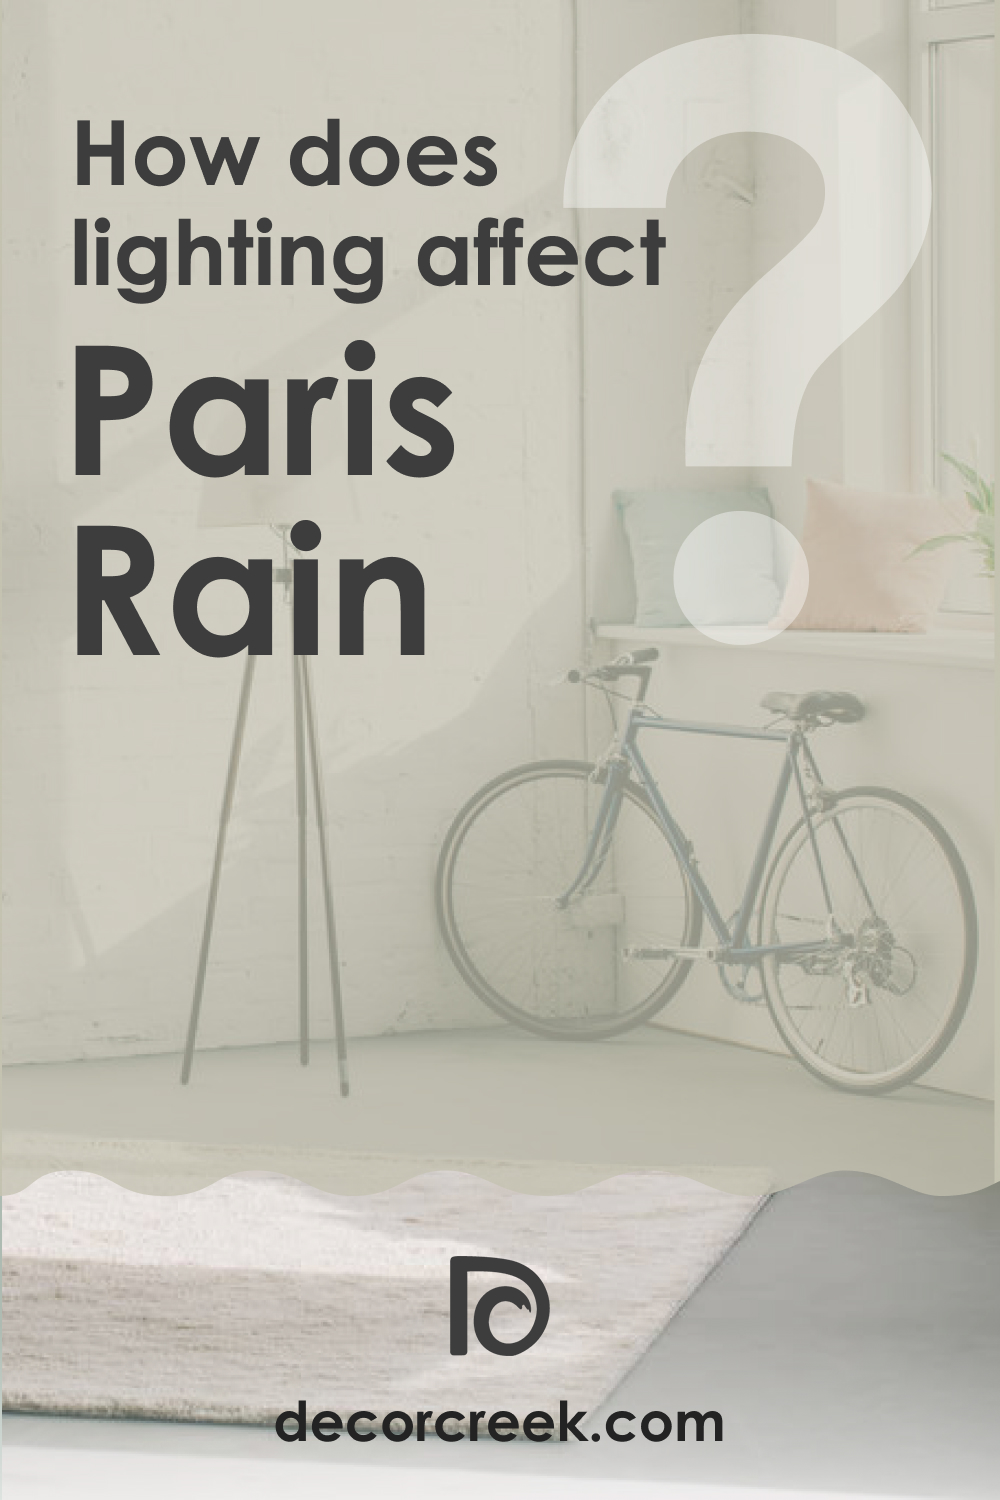 How Does Lighting Affect Paris Rain 1501?